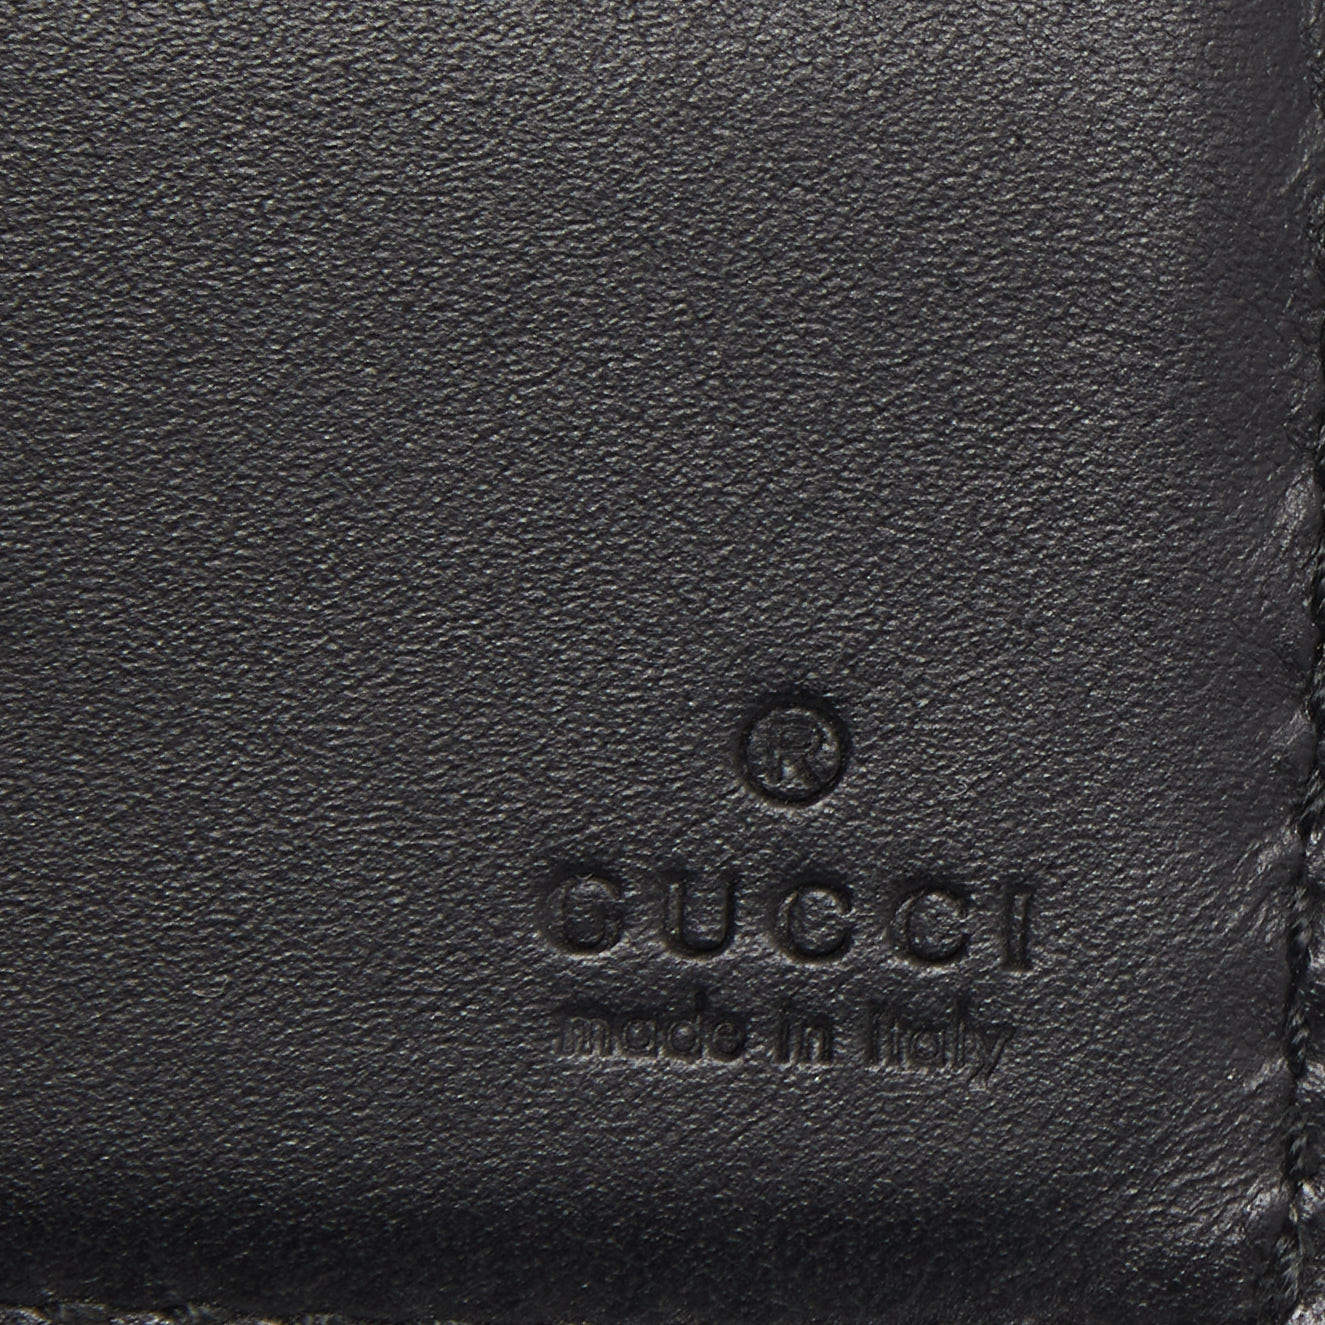 Gucci Wallet Beige GG Supreme Signature Canvas Tiger Print - EXCELLENT